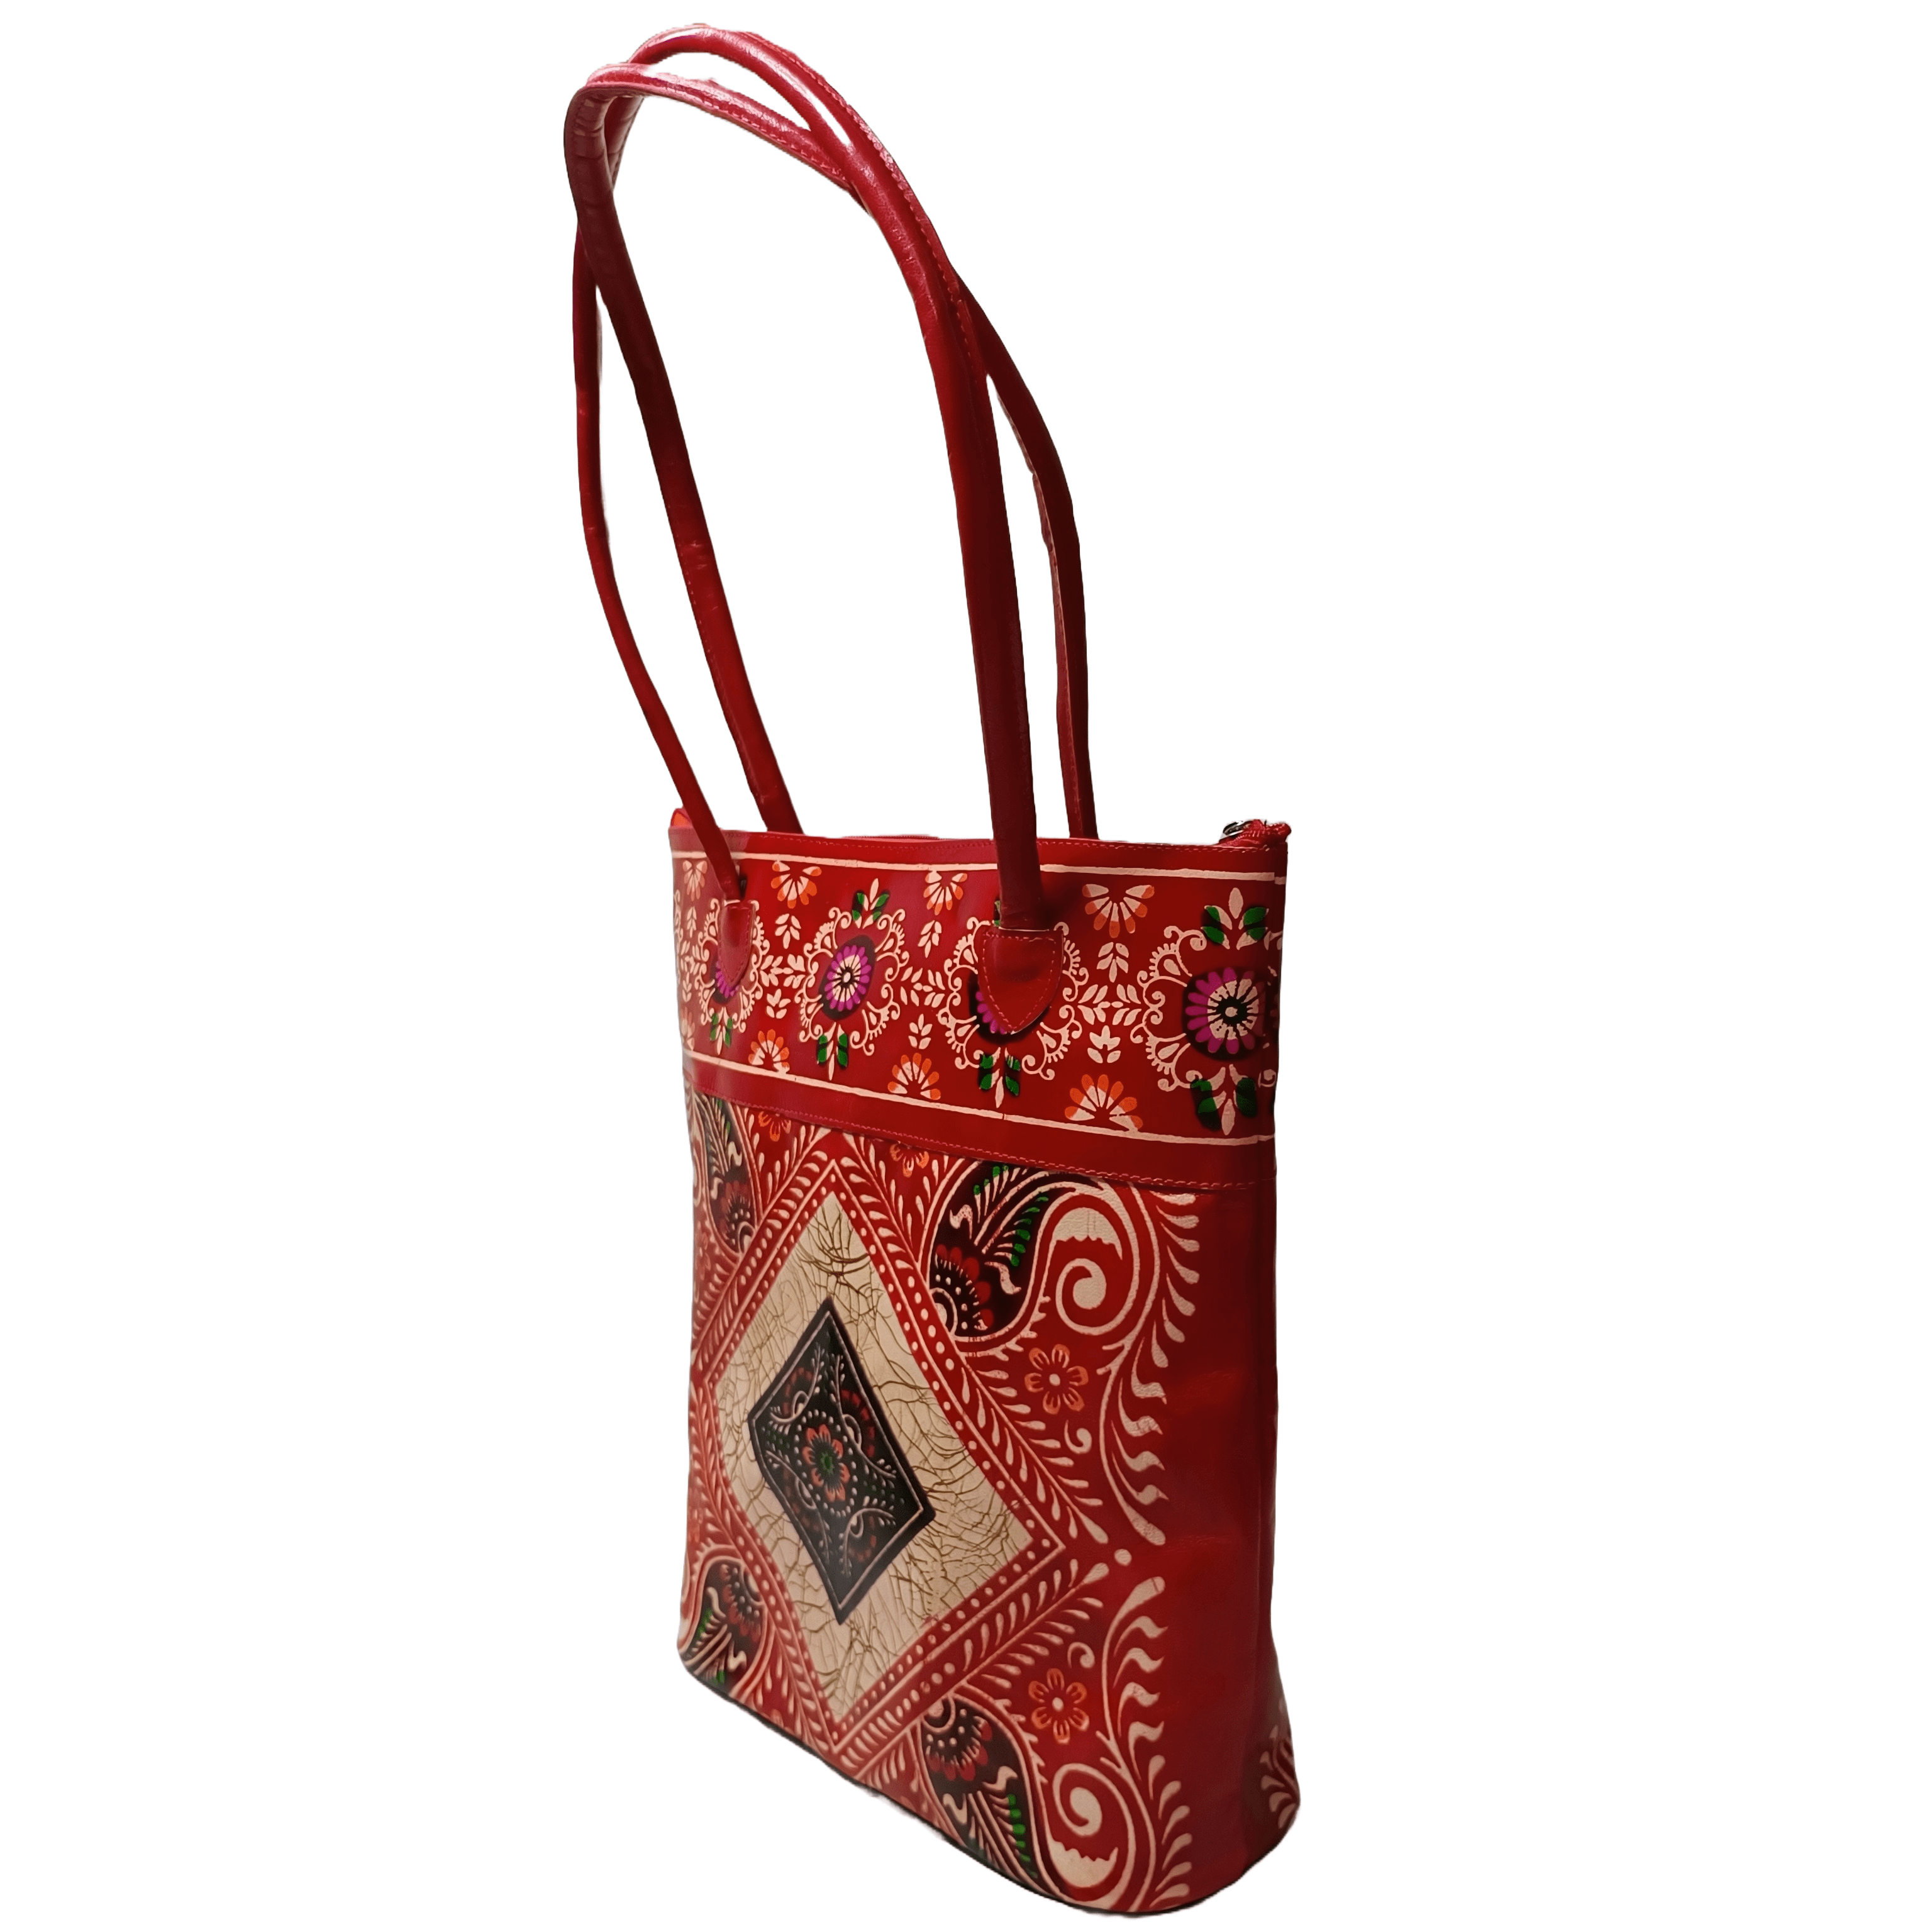 Shantiniketan Genuine Leather Handcrafted Batik Printed Big Size Shopping Bag - 0